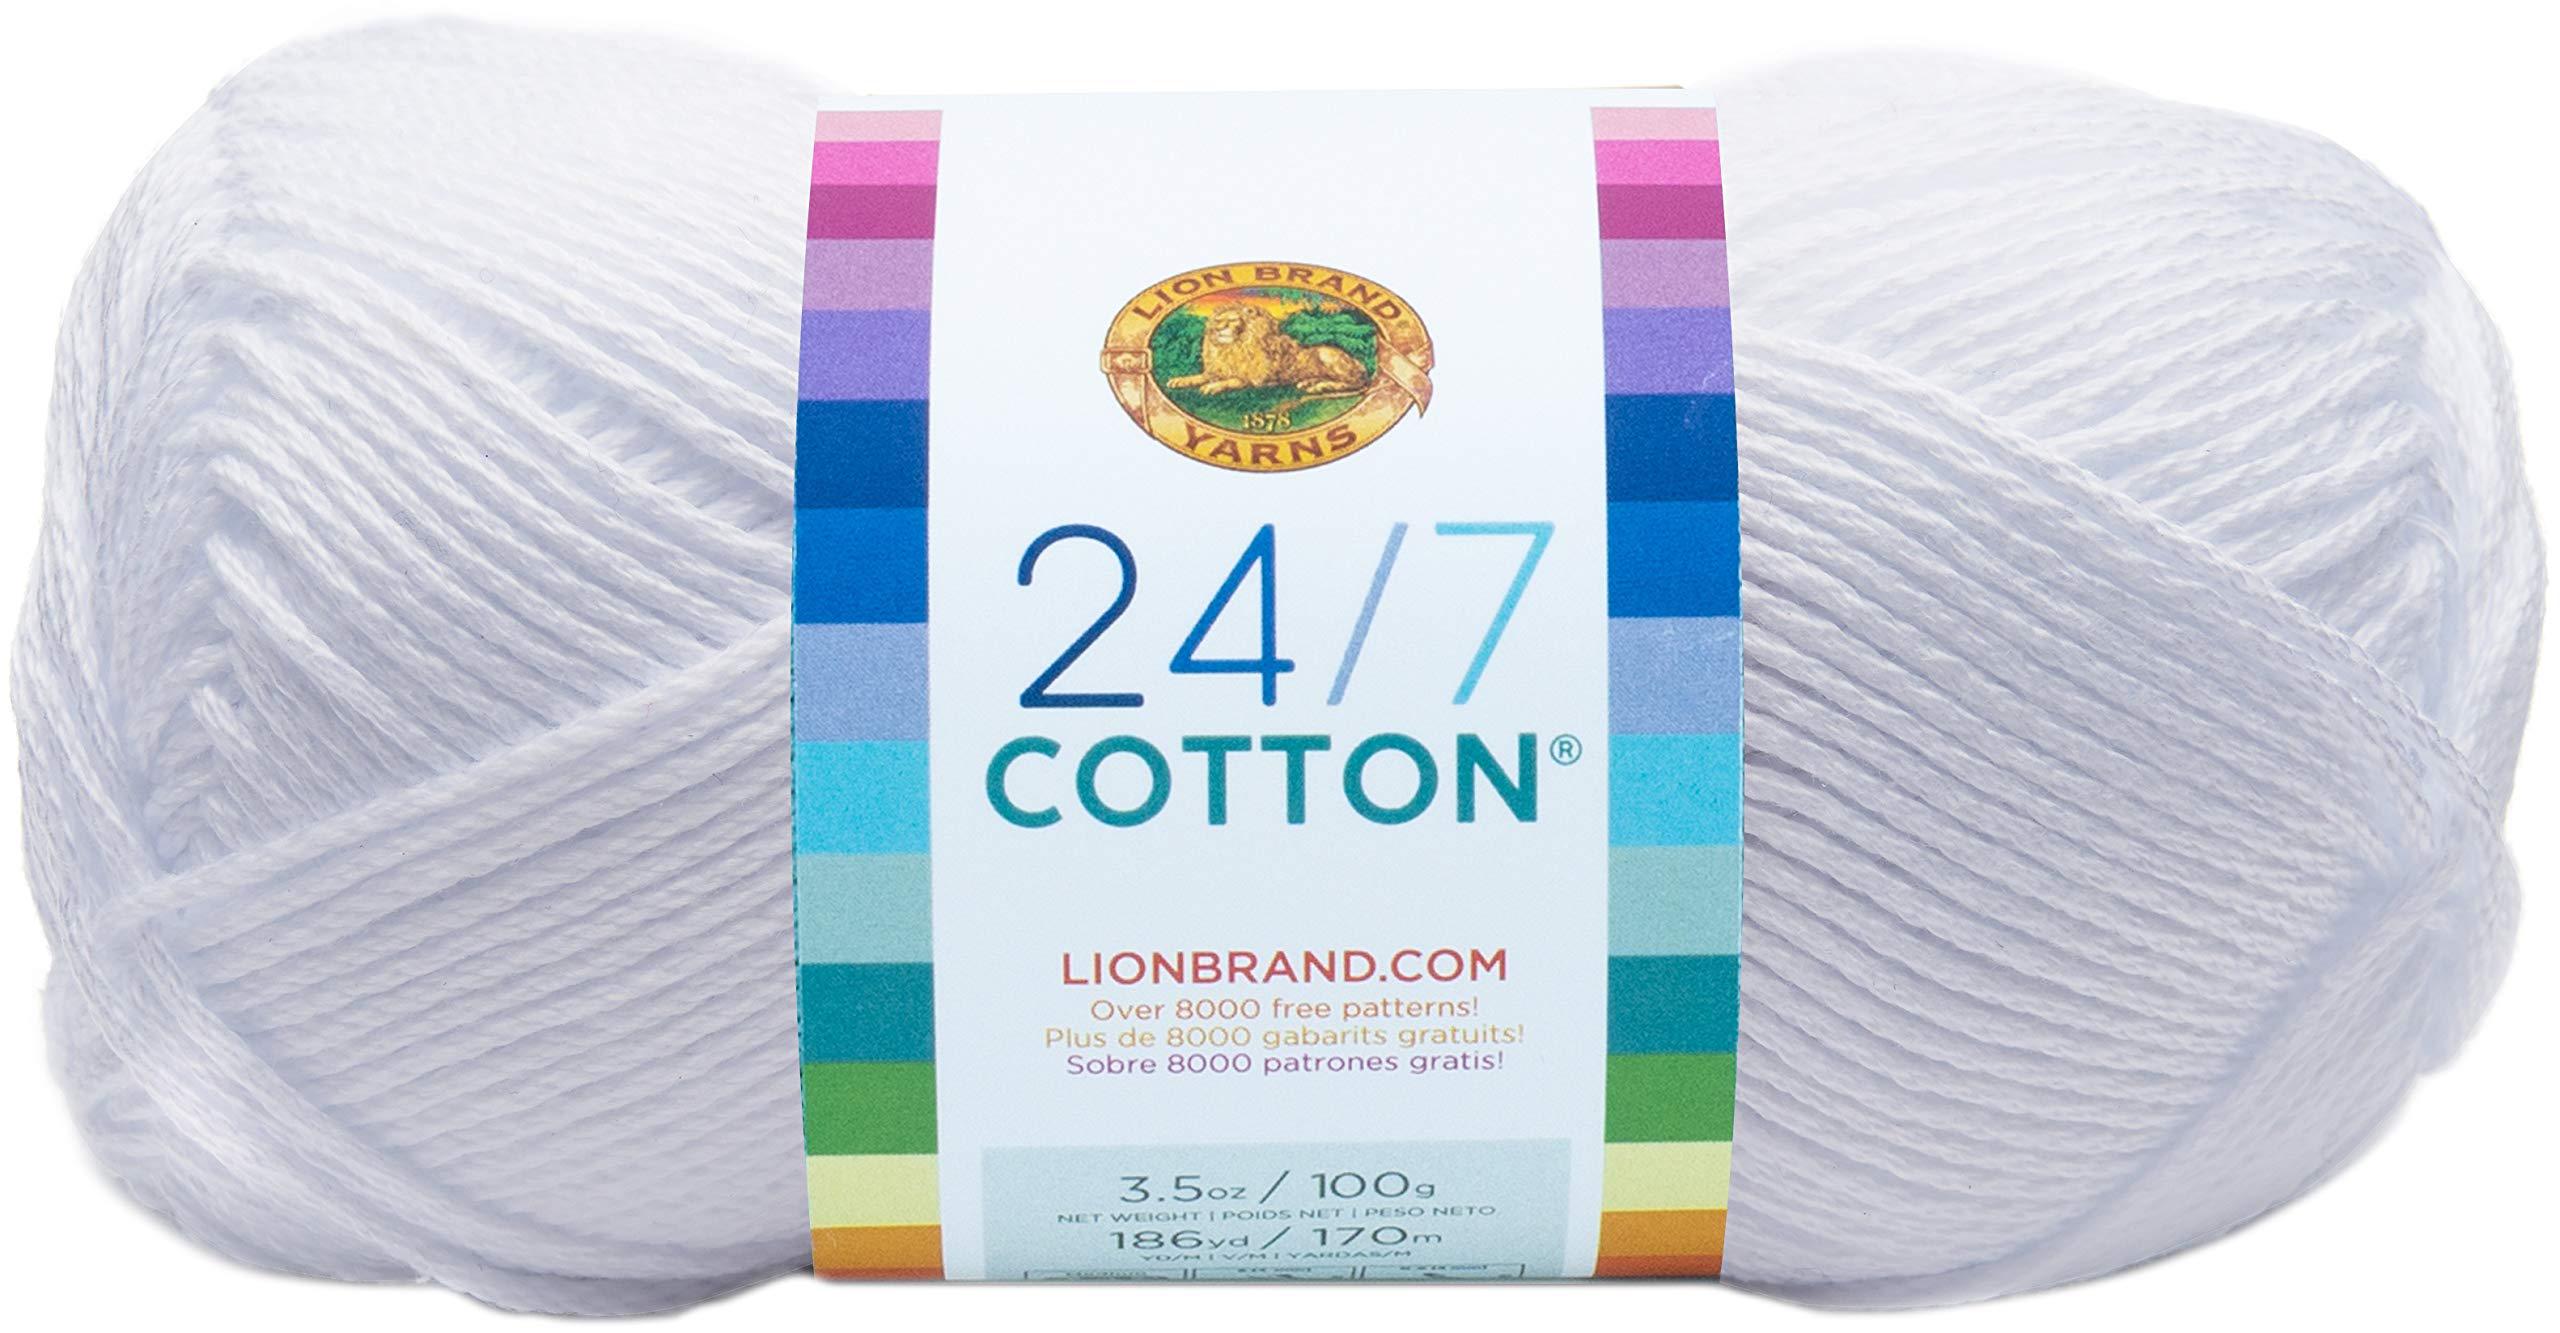 Lion Brand Yarn lion brand 24/7 cotton yarn white 761-100 (6-skein) same dye lot worsted medium #4 soft knitting yarn crochet 100% cotton bun